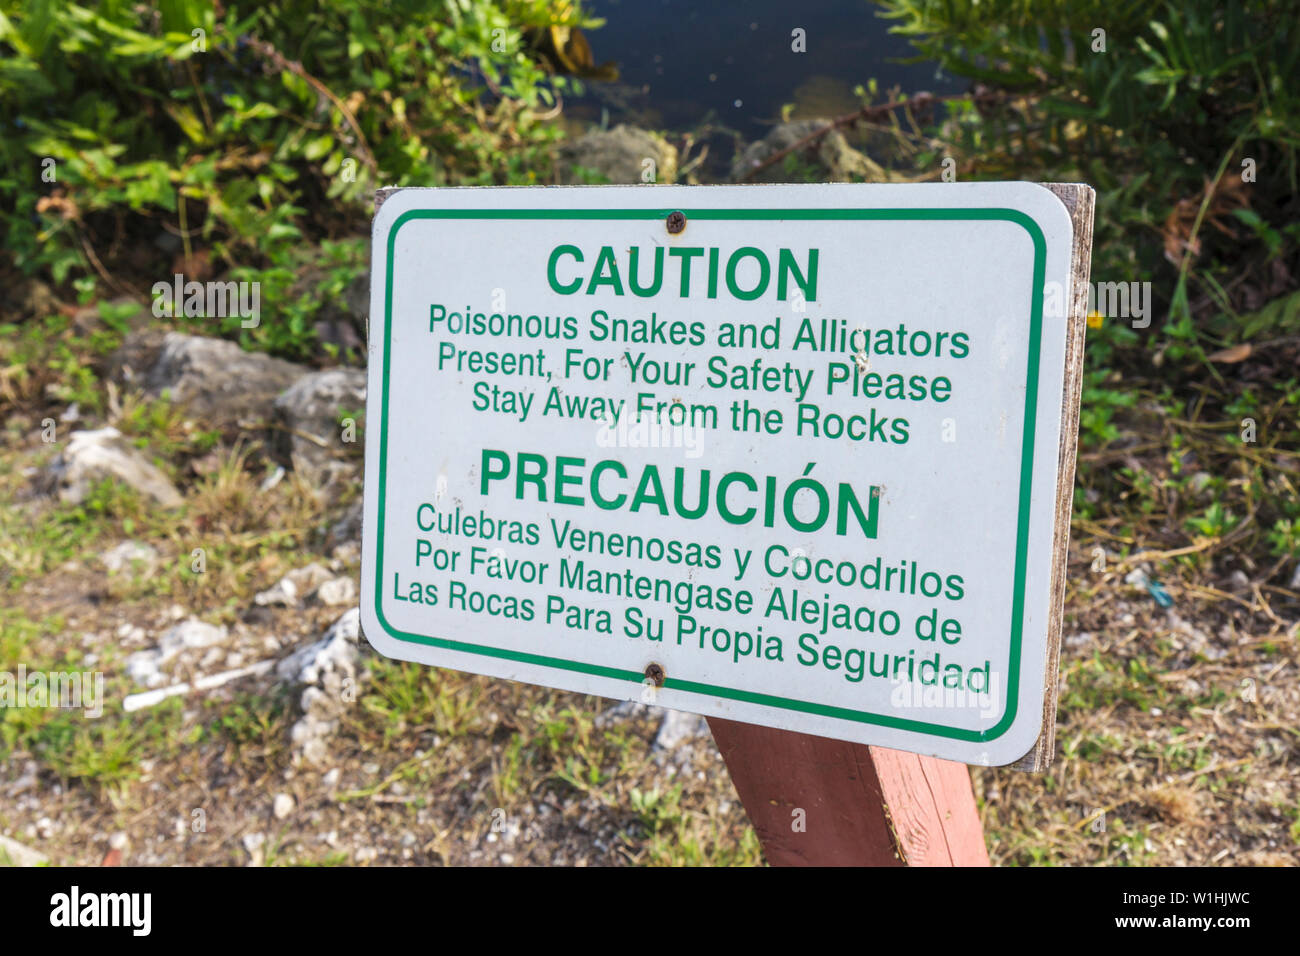 Miami Florida,Wyndham Miami Airport,hotel,canal,shore,sign,warning,caution,bilingual,Spanish,English,beware,poisonous snakes,alligators,safety,FL09103 Stock Photo